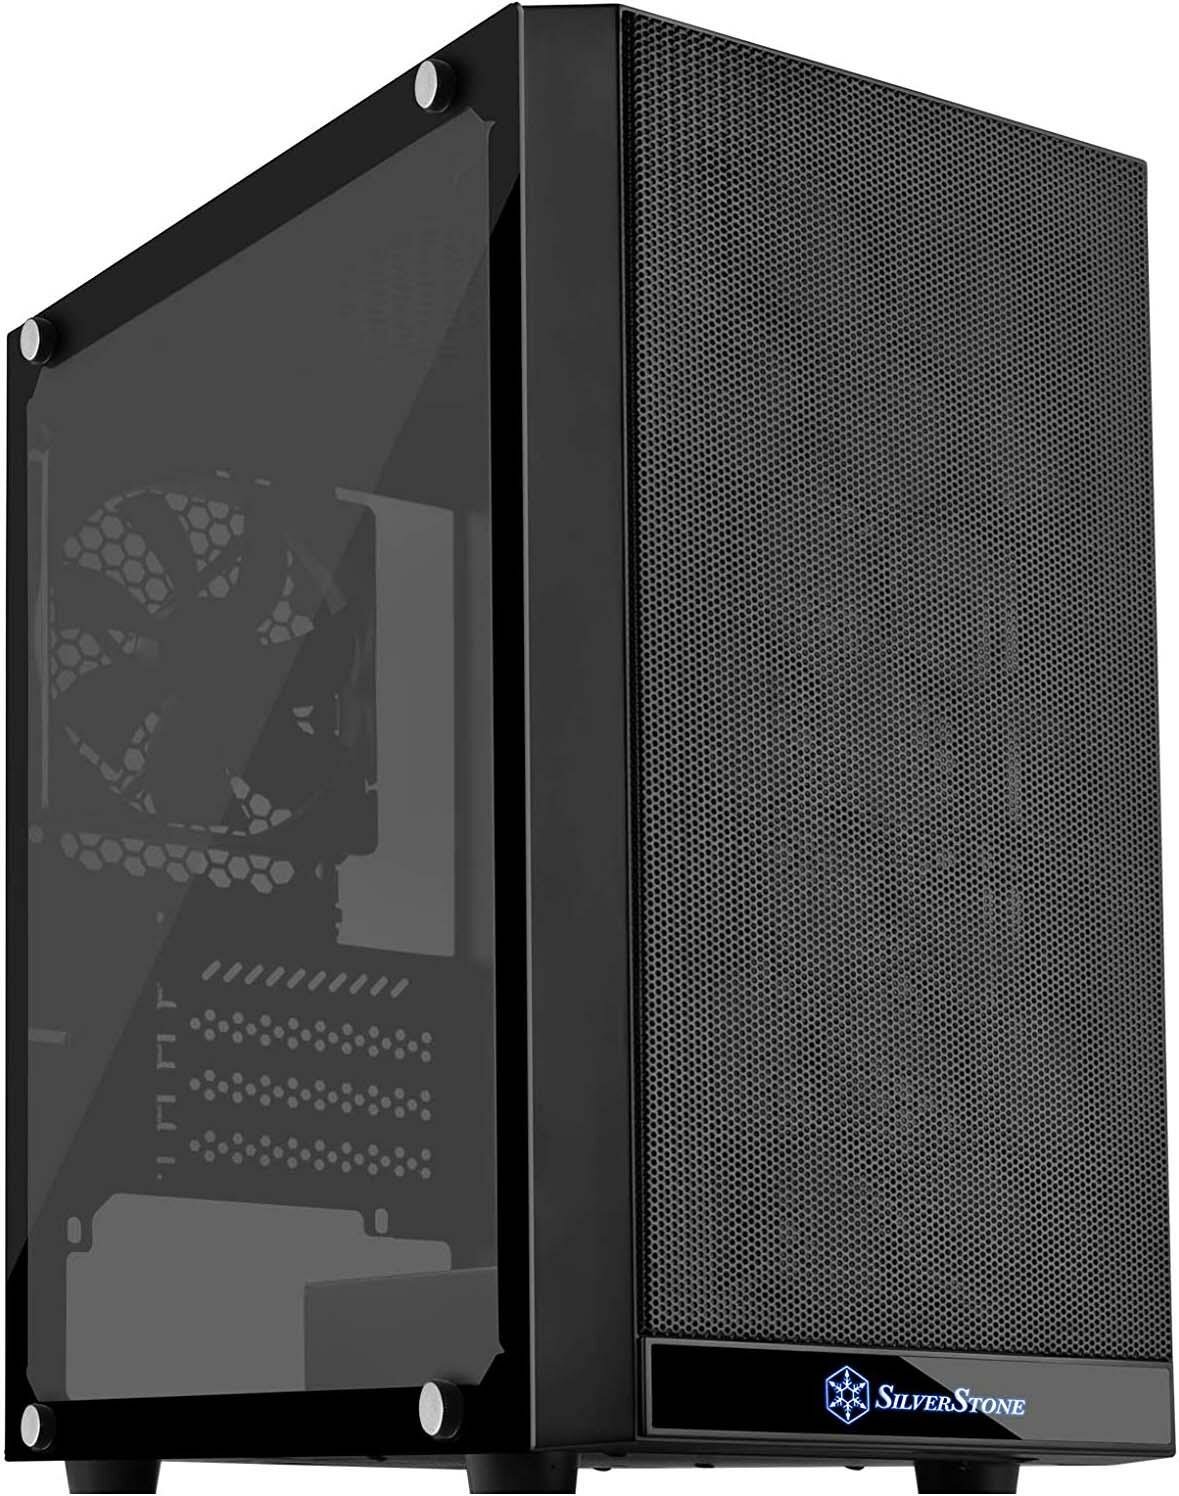 SST-PS15B-G Precision Mini Tower Micro ATX Computer Case, tempered glass, black (226957)